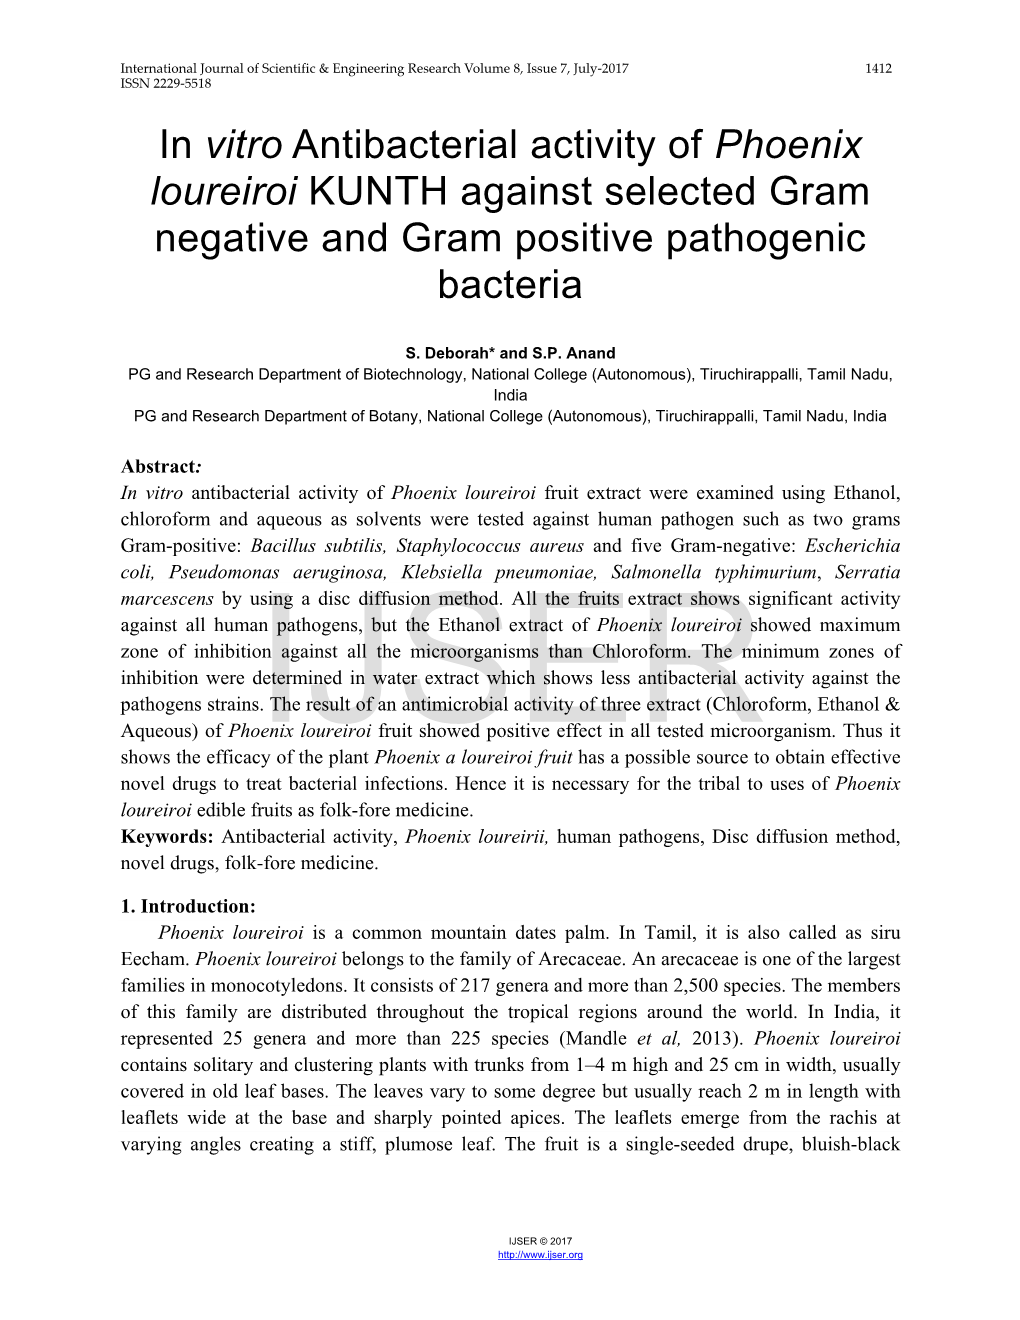 Phoenix Loureiroi KUNTH Against Selected Gram Negative and Gram Positive Pathogenic Bacteria